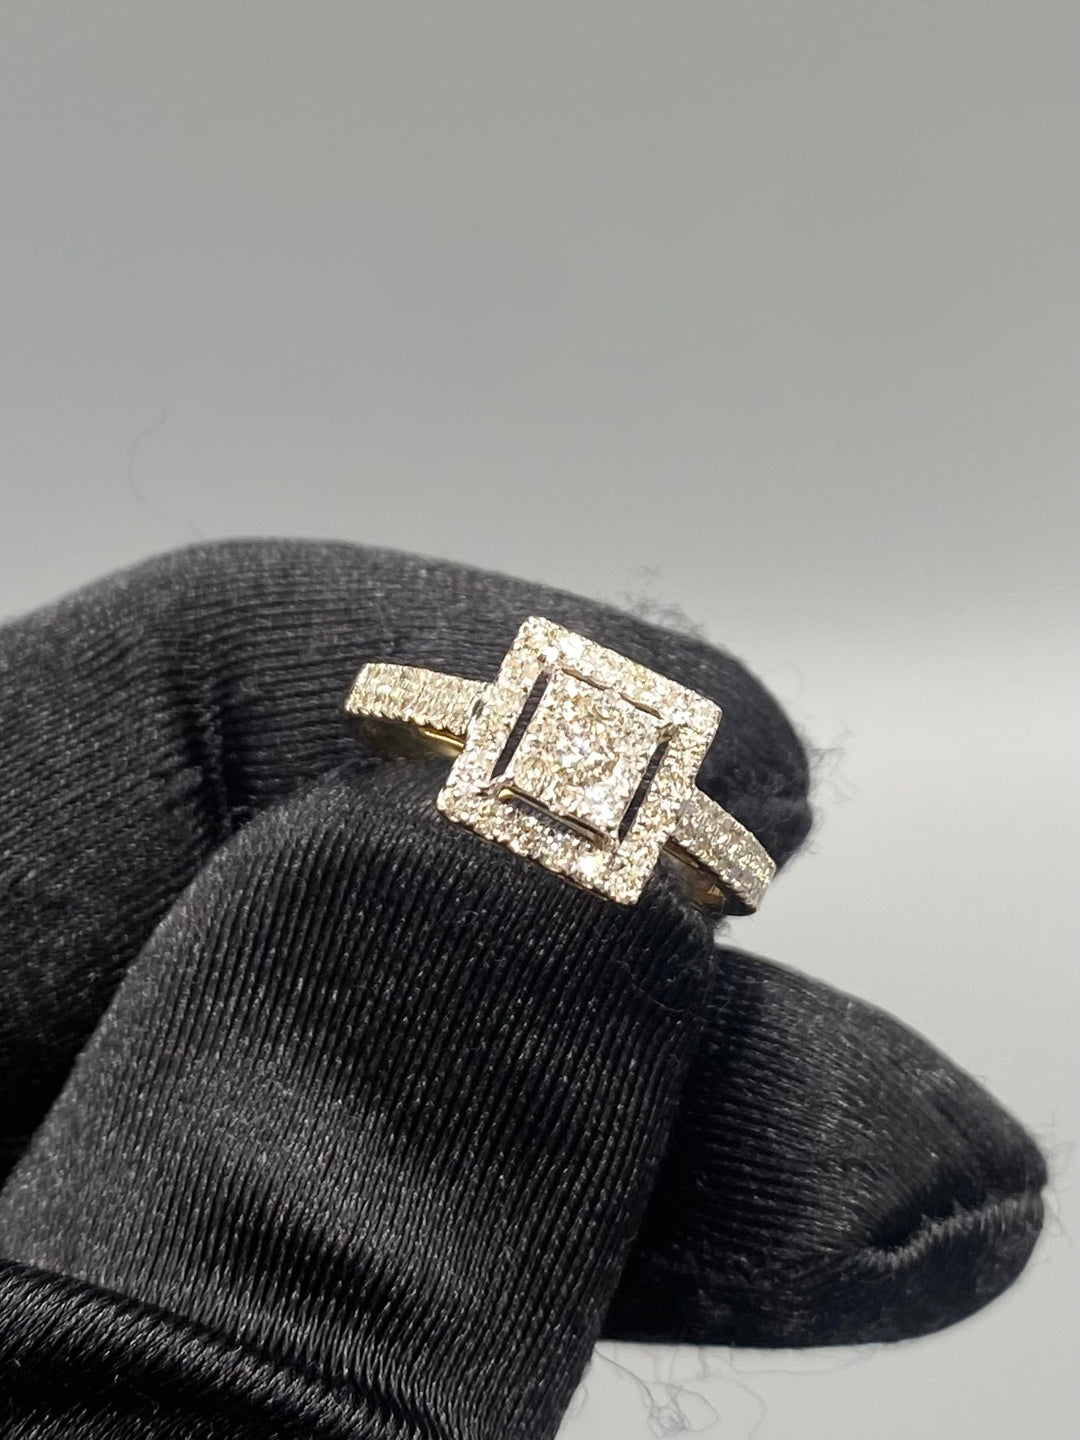 Genuine 18kt Gold Diamond Women’s Ring of 0.56 ctw